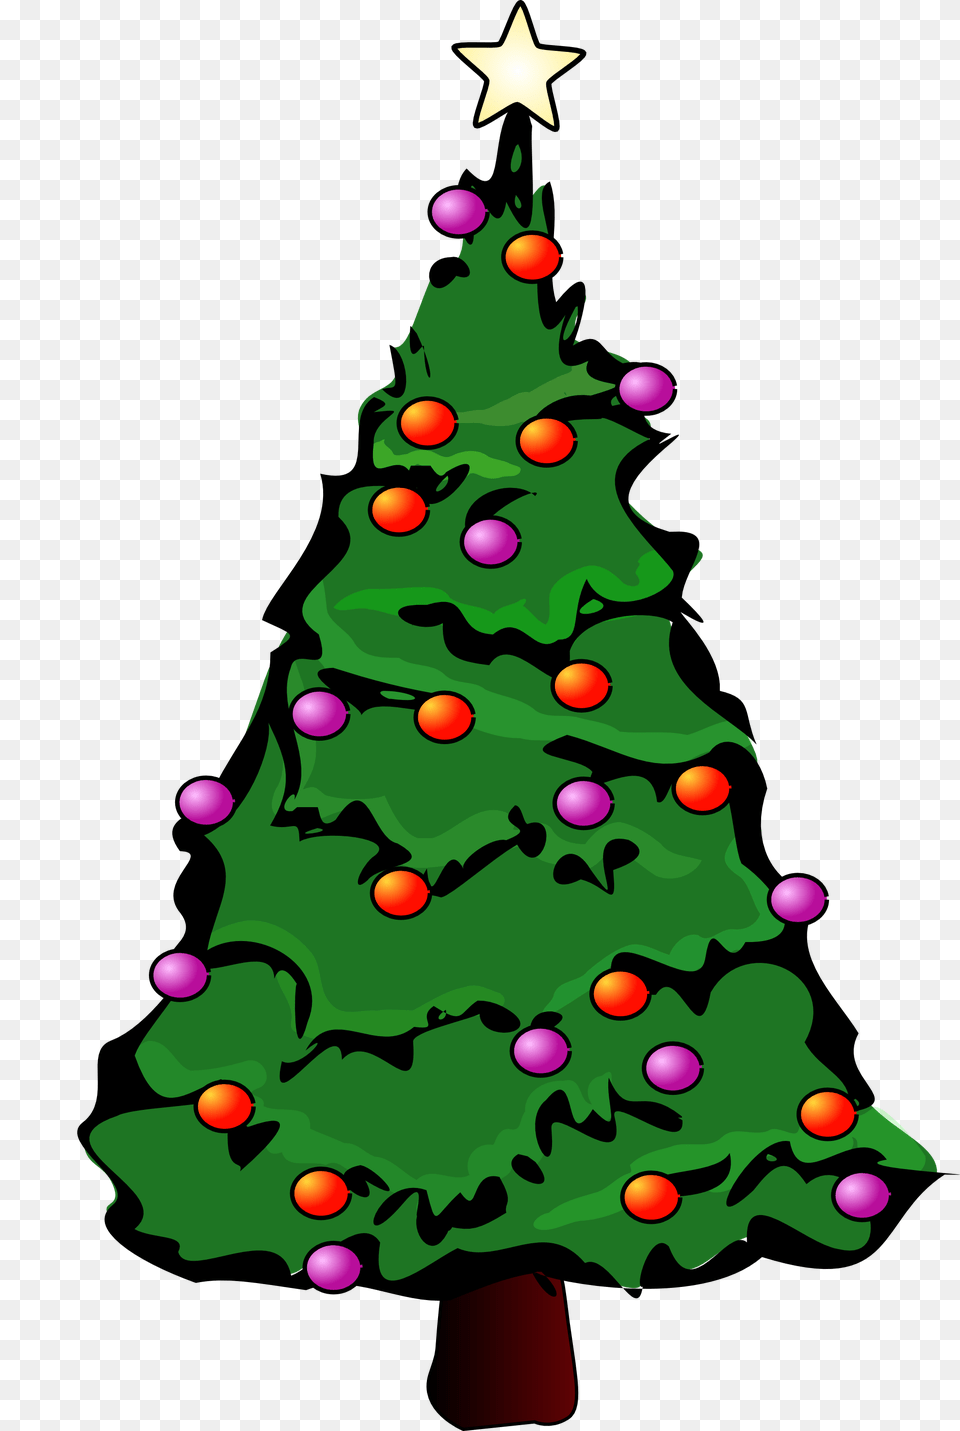 Theresaknott Christmas Tree Christmas Tree Hd Clipart, Plant, Festival, Christmas Decorations, Christmas Tree Png